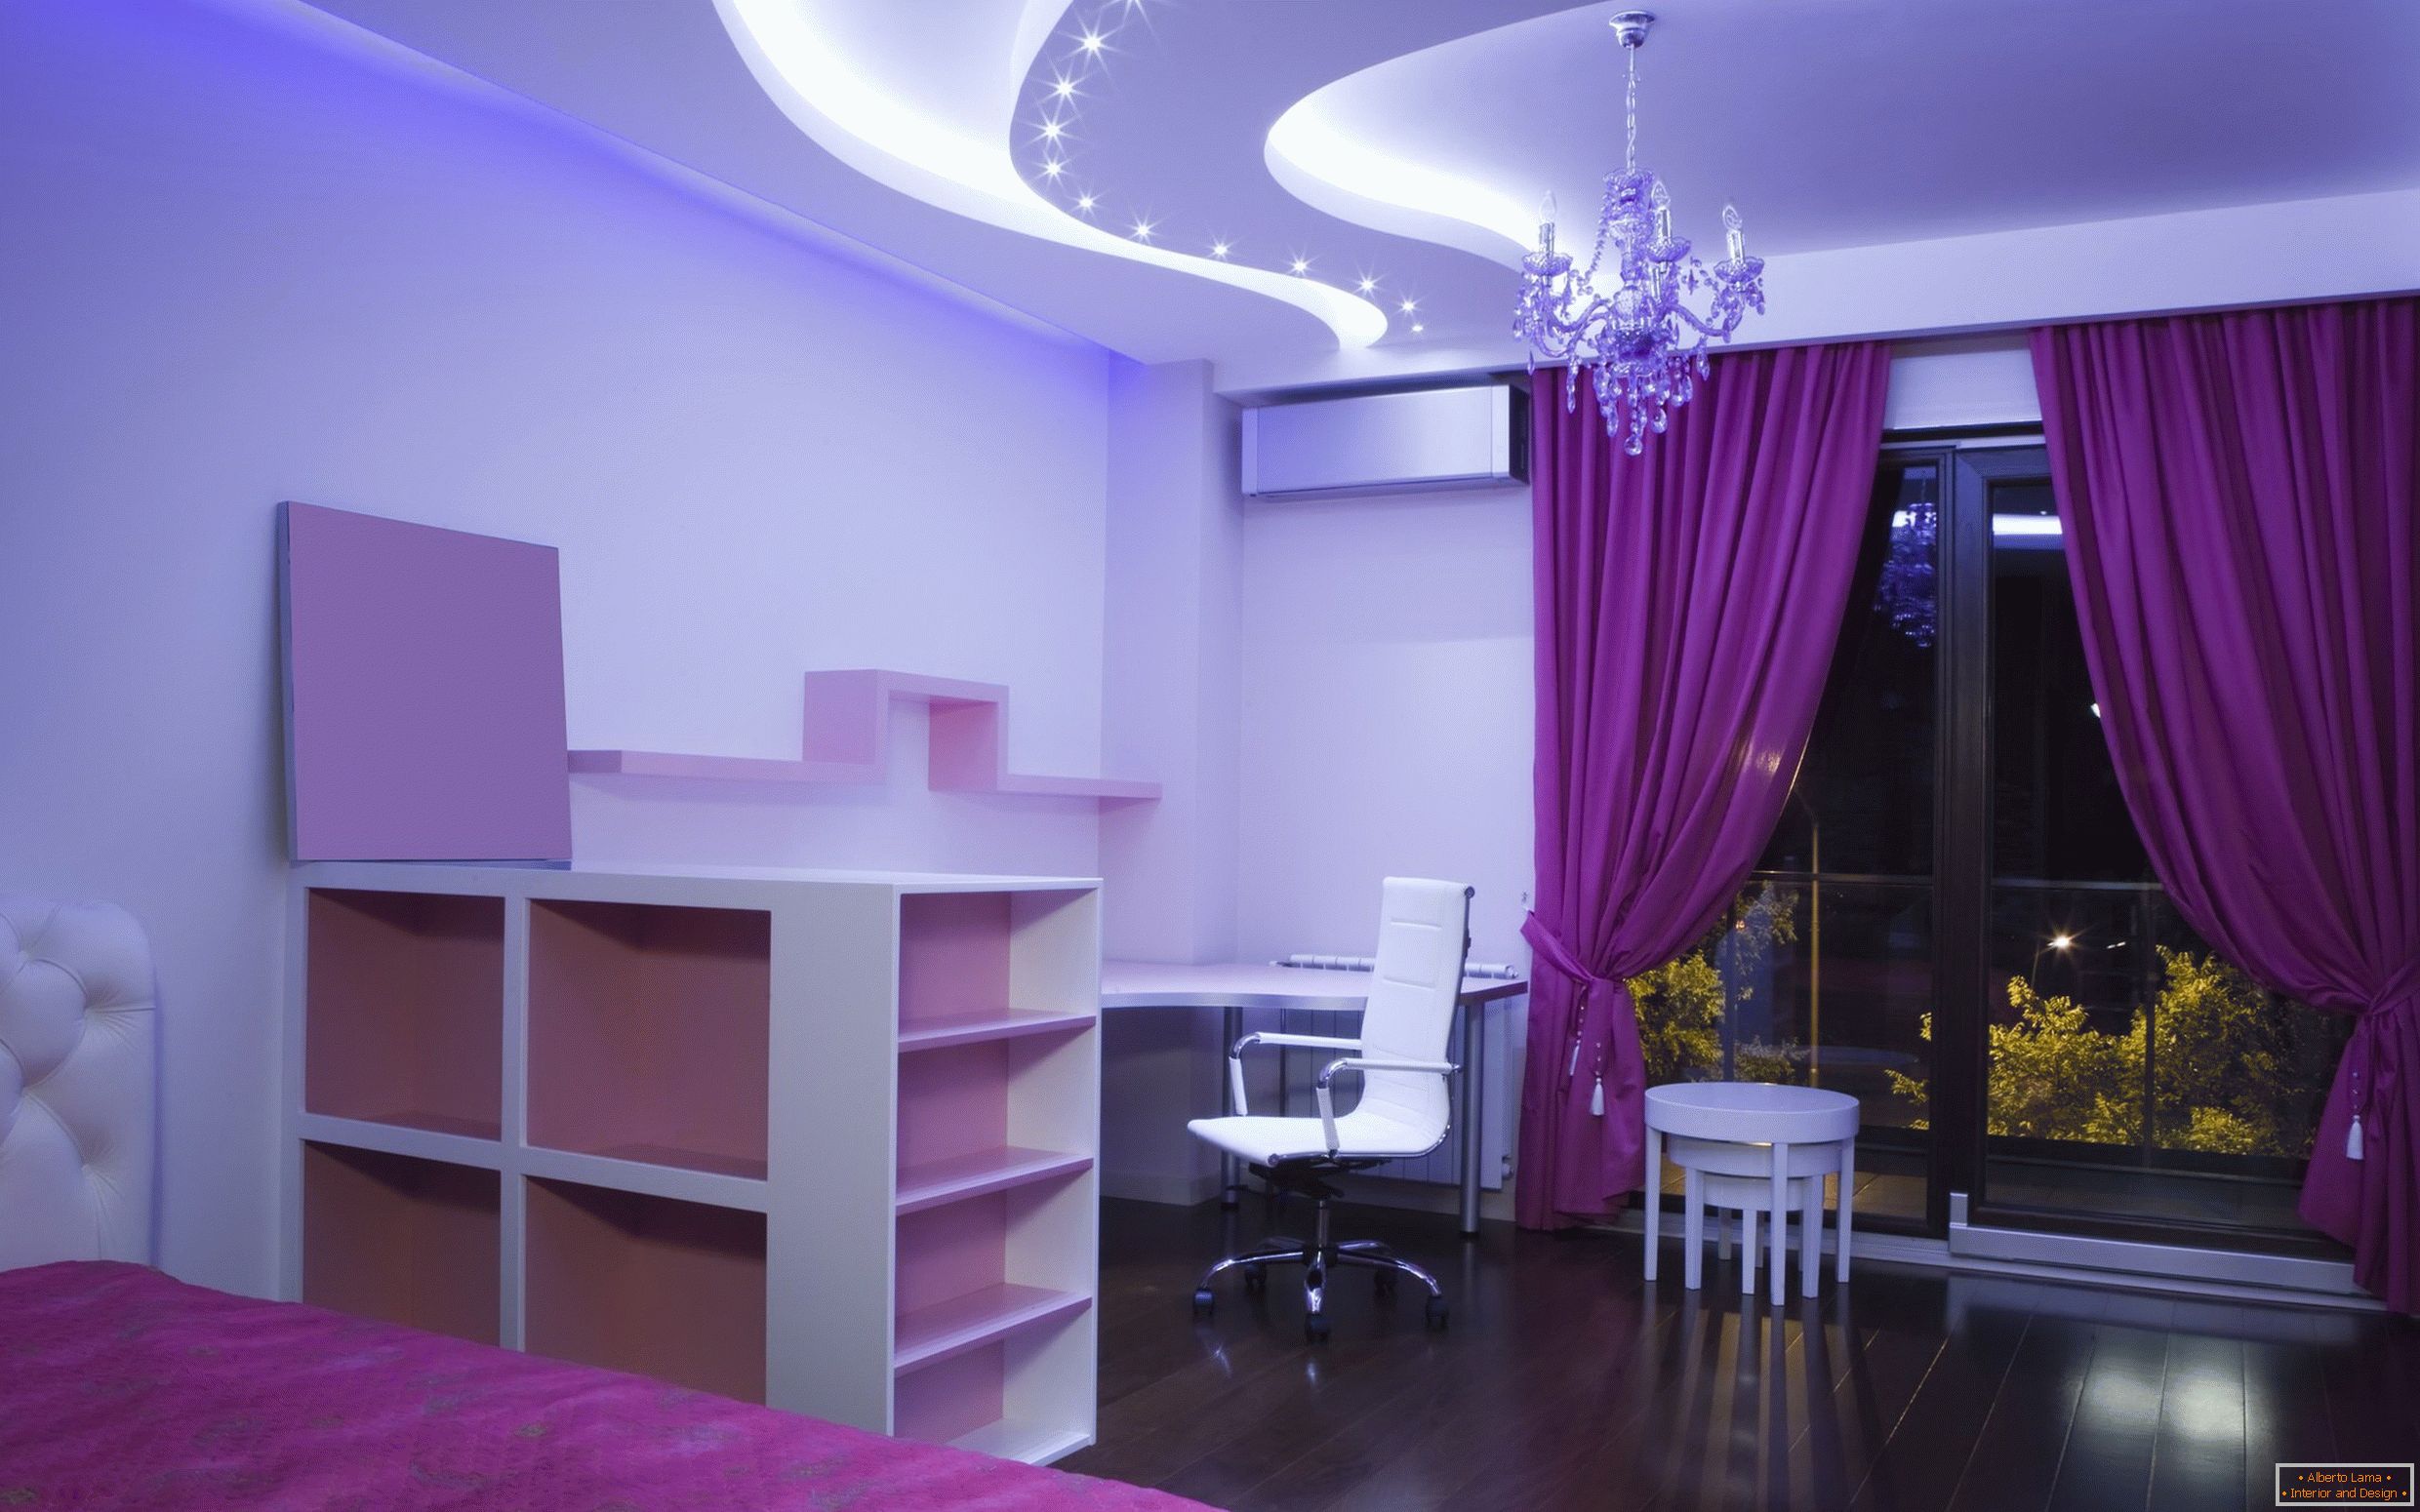 Room in lilac tones